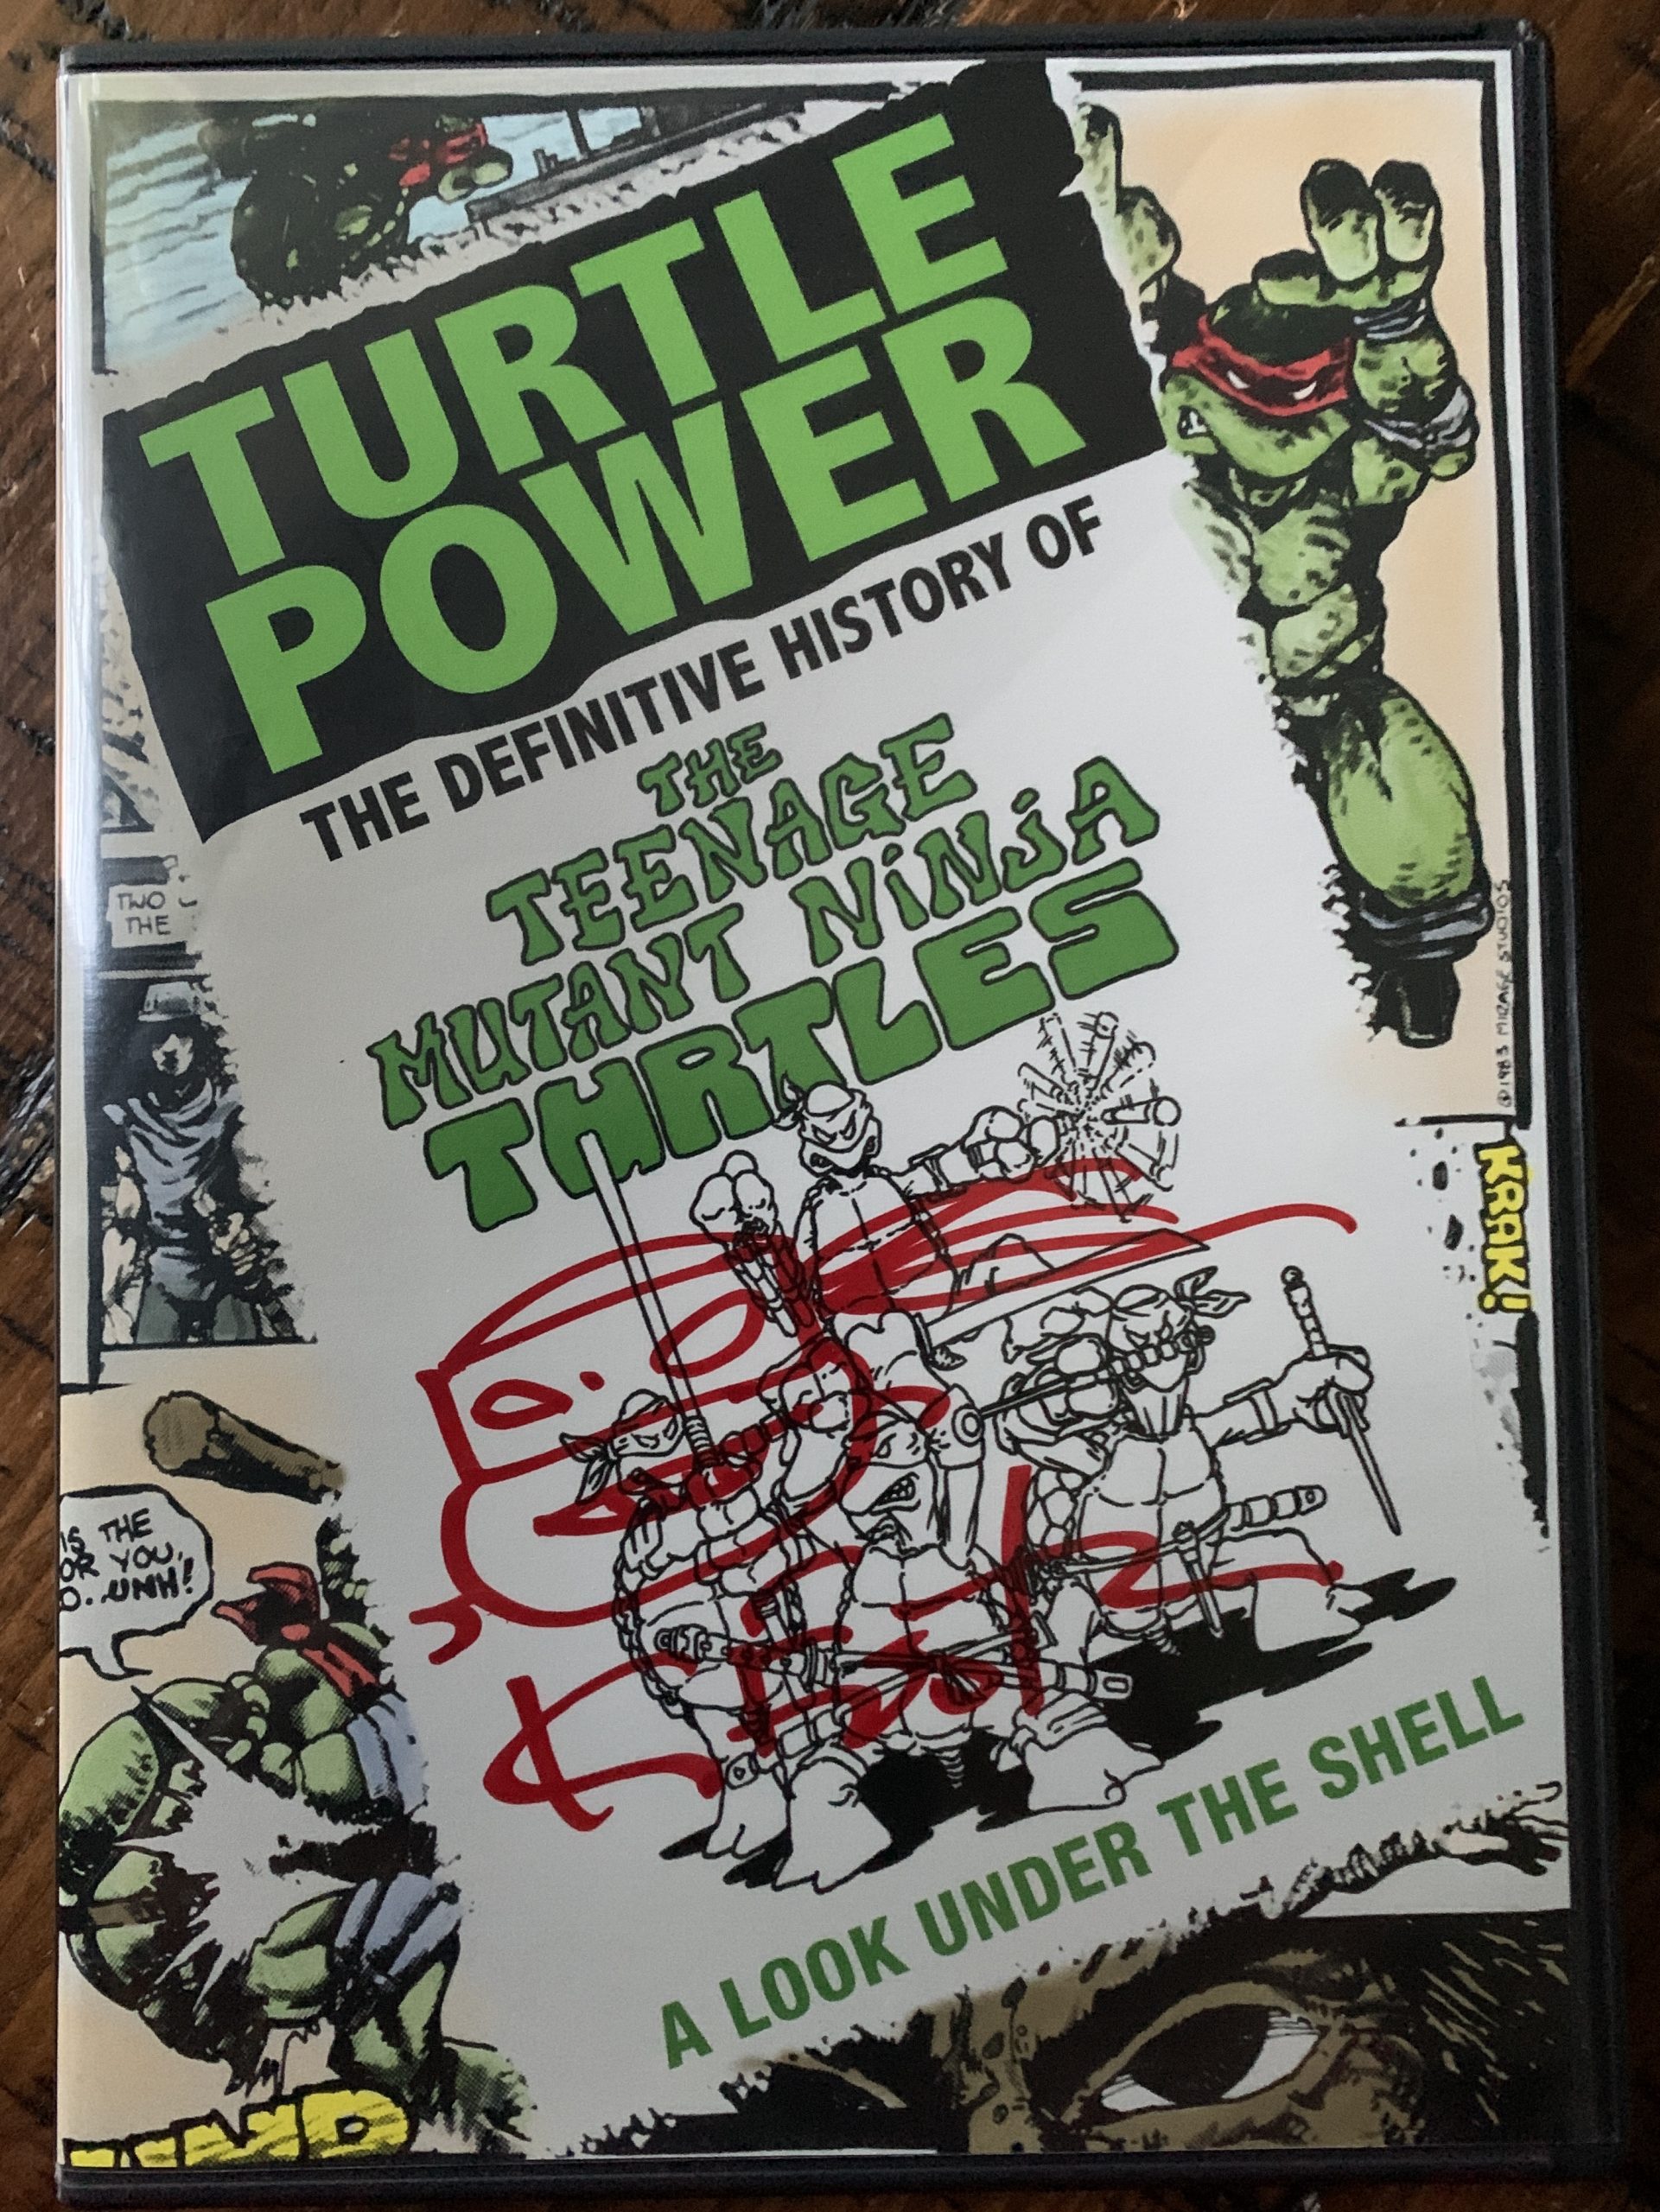 Turtle Power: The Definitive History Of The Teenage Mutant Ninja Turtles DVD SIGNED